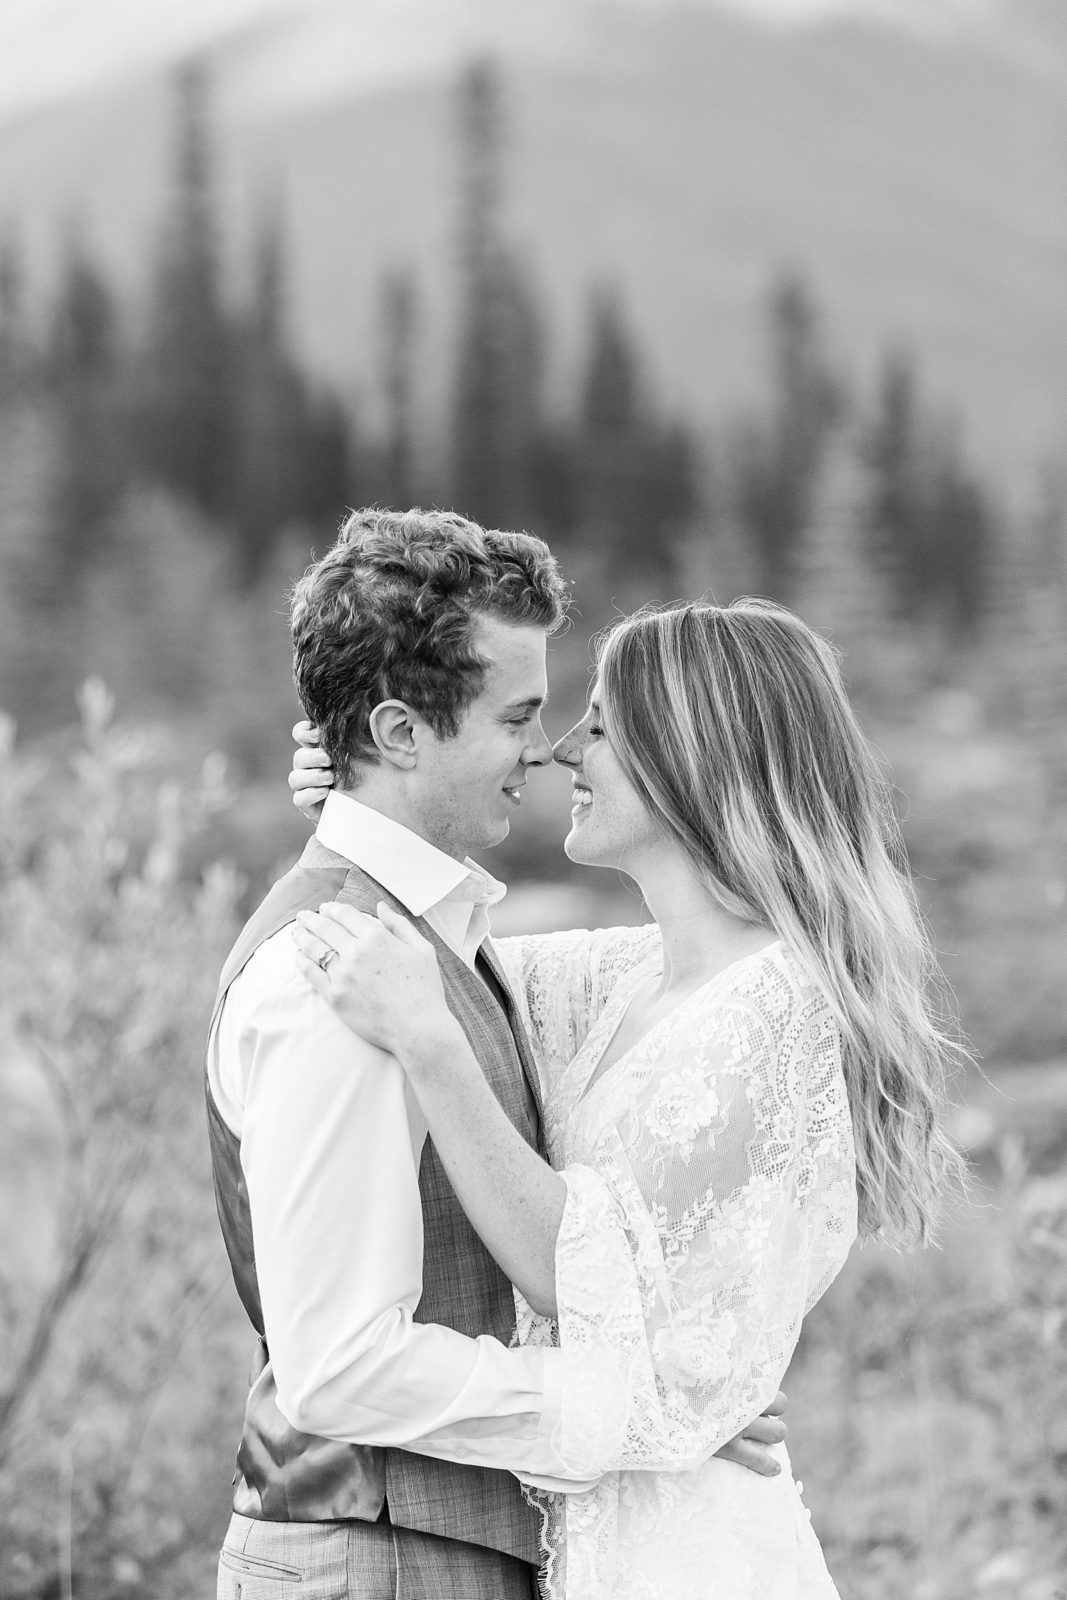 Krystal Moore Photography Kananaskis Mountains Wedding Bride and Groom